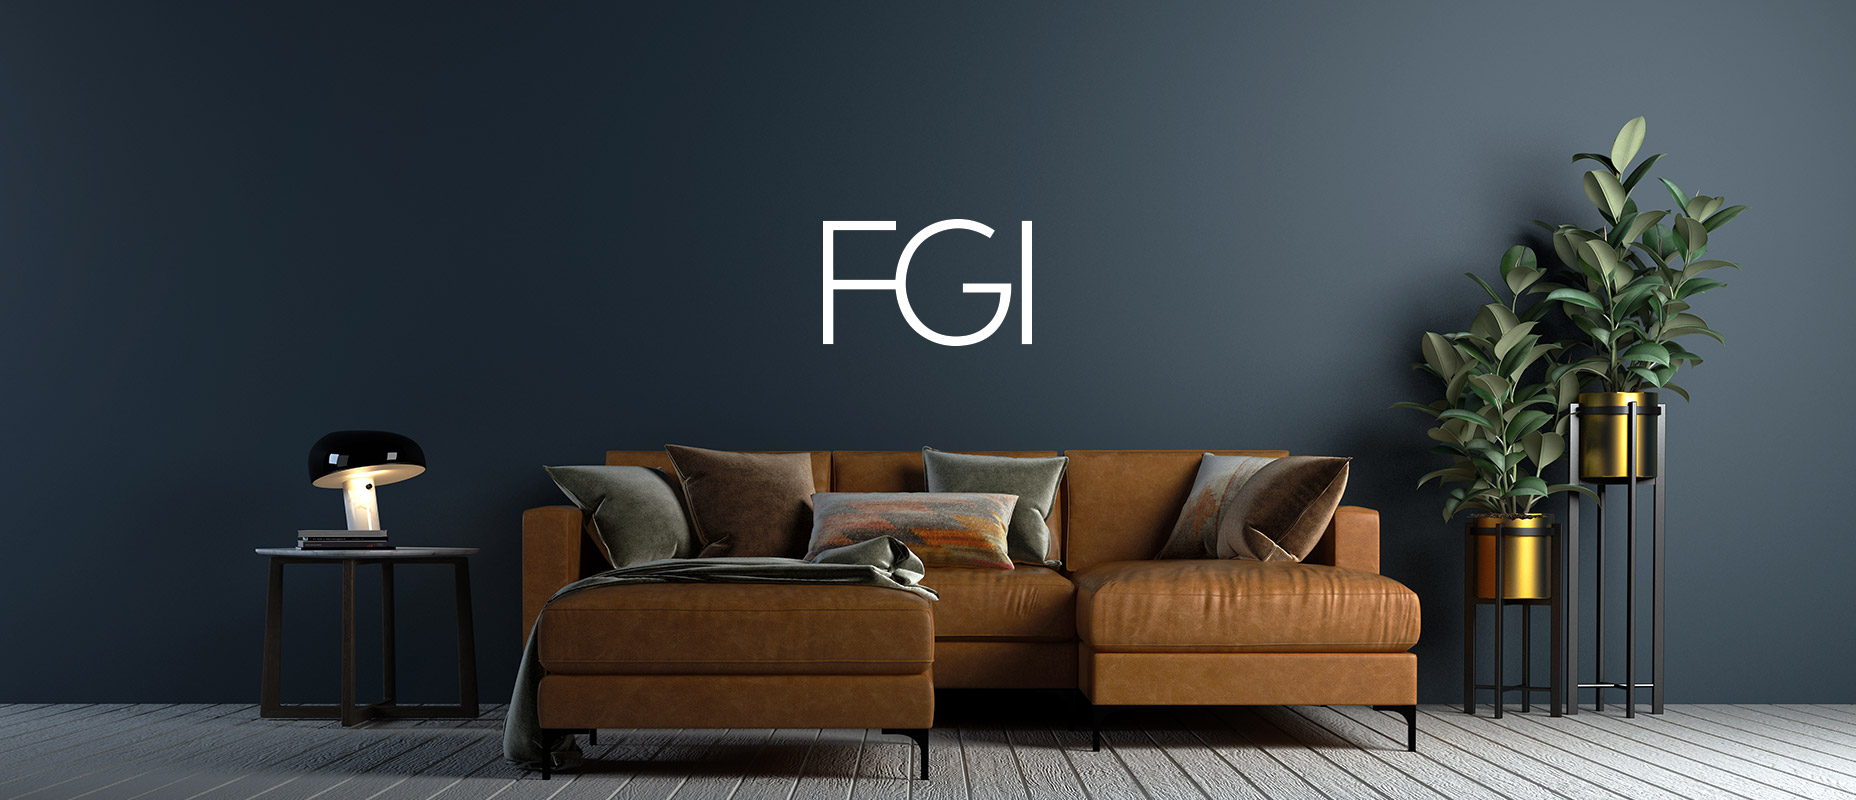 FGI Industries IPO